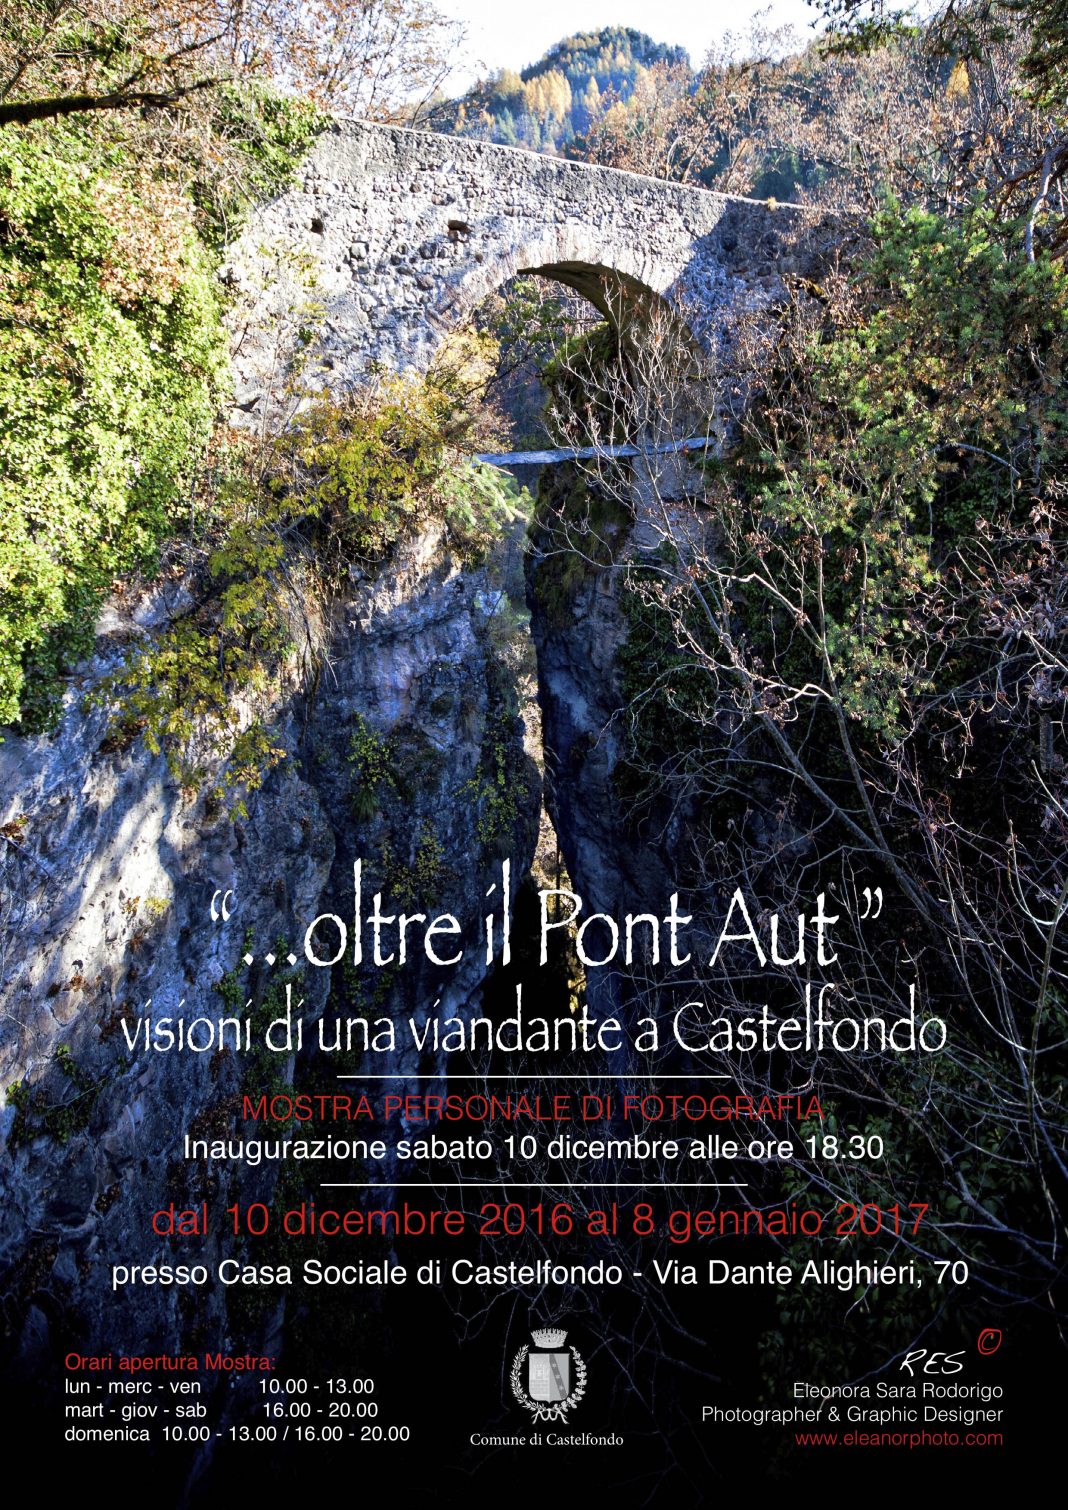 Lola Rodorigo – …Oltre il Pont Aut. Visioni di una viandante a Castelfondohttps://www.exibart.com/repository/media/formidable/11/LOCANDINAa3-1-1068x1510.jpg